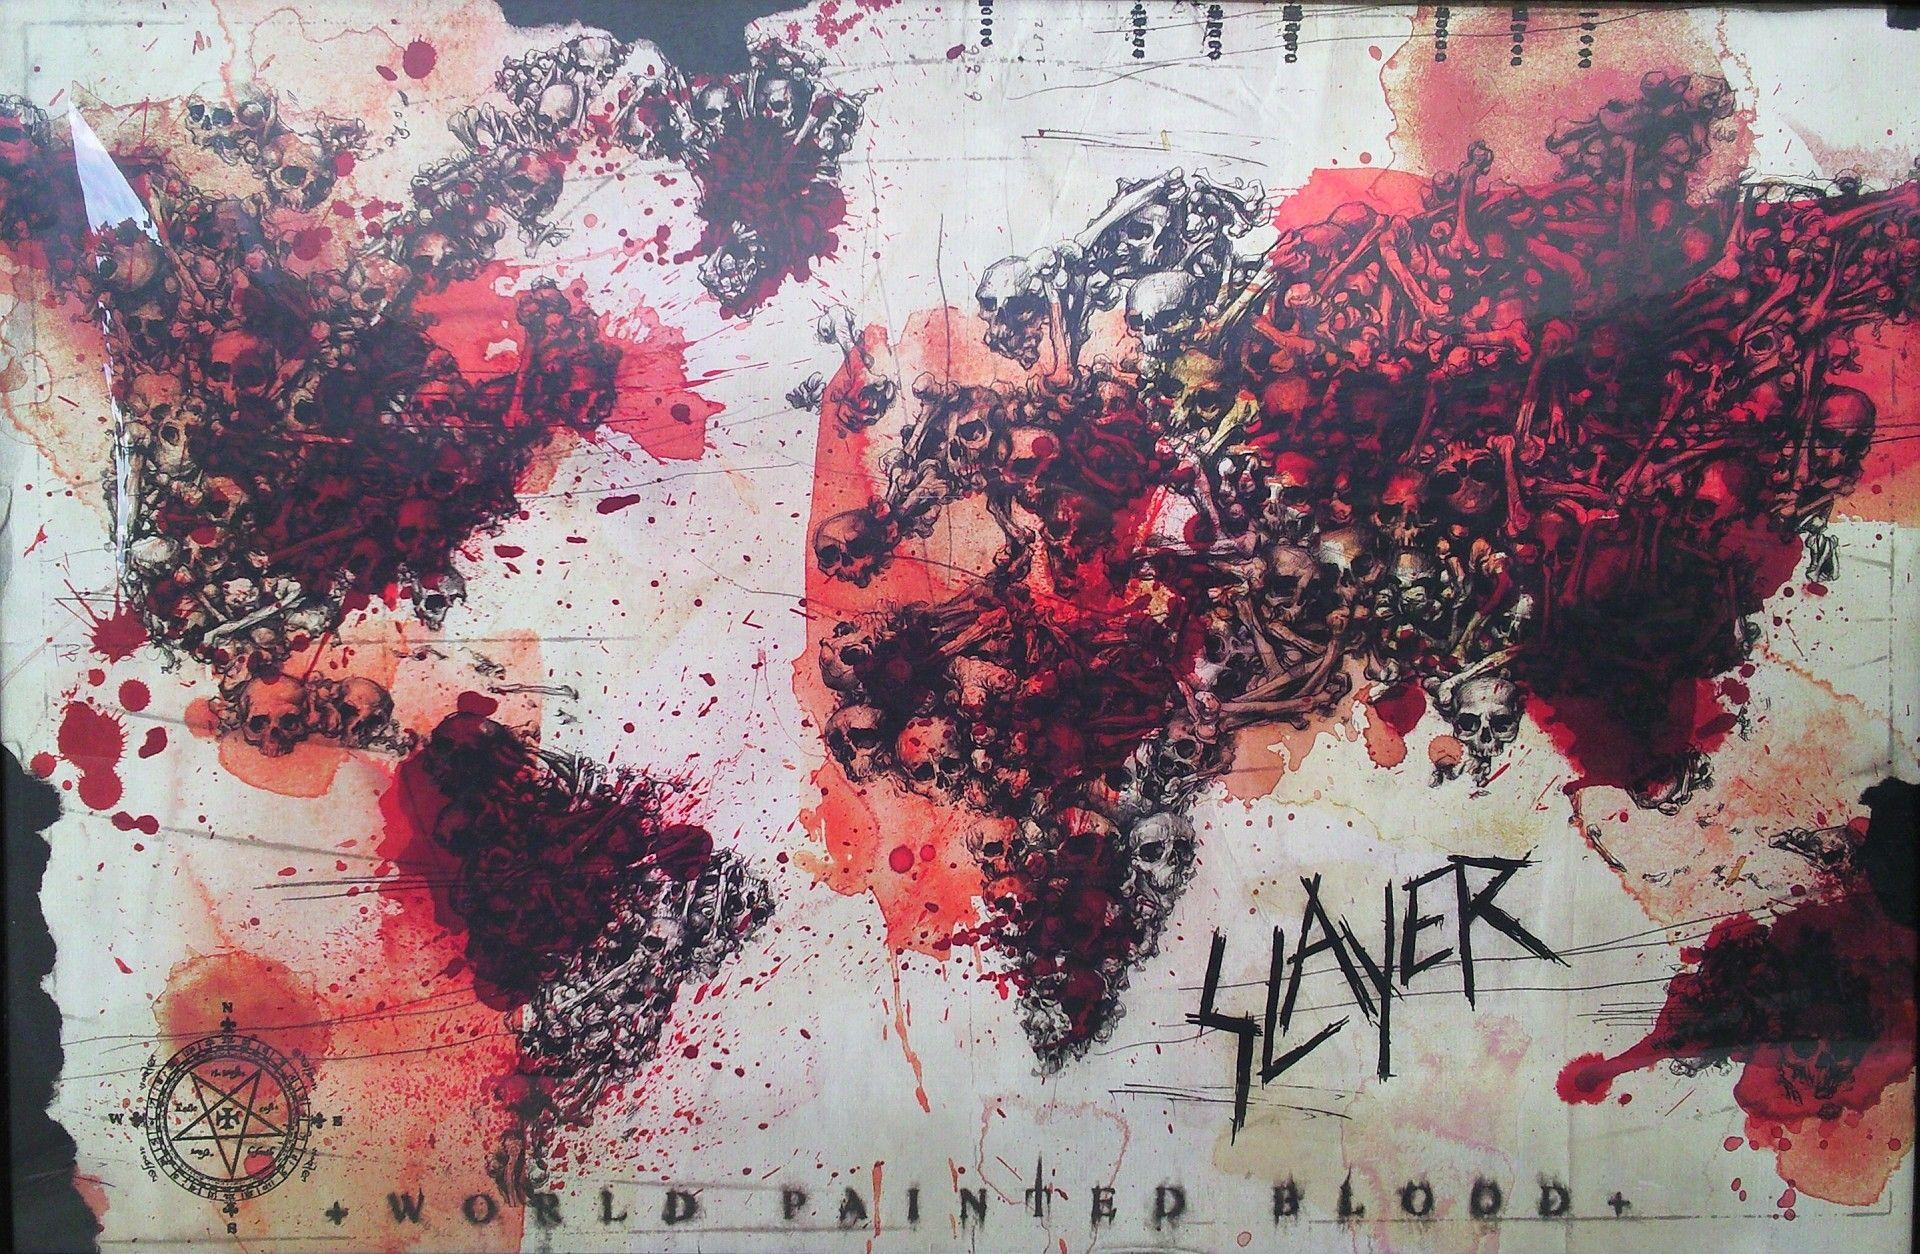 Slayer Wallpaper (3604)